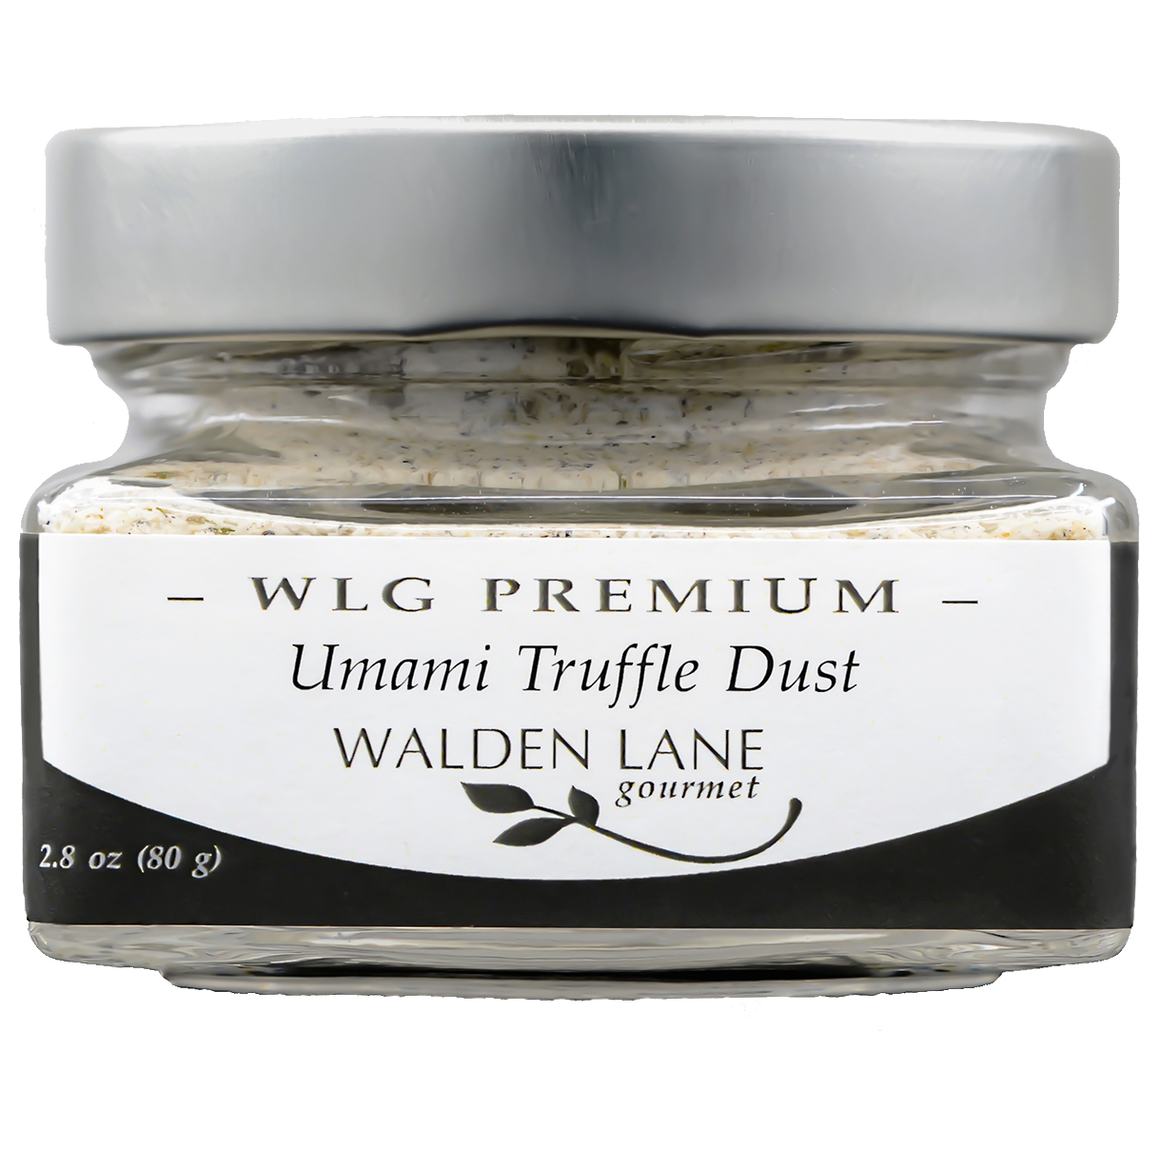 WLG Premium - Umami Black Truffle Dust